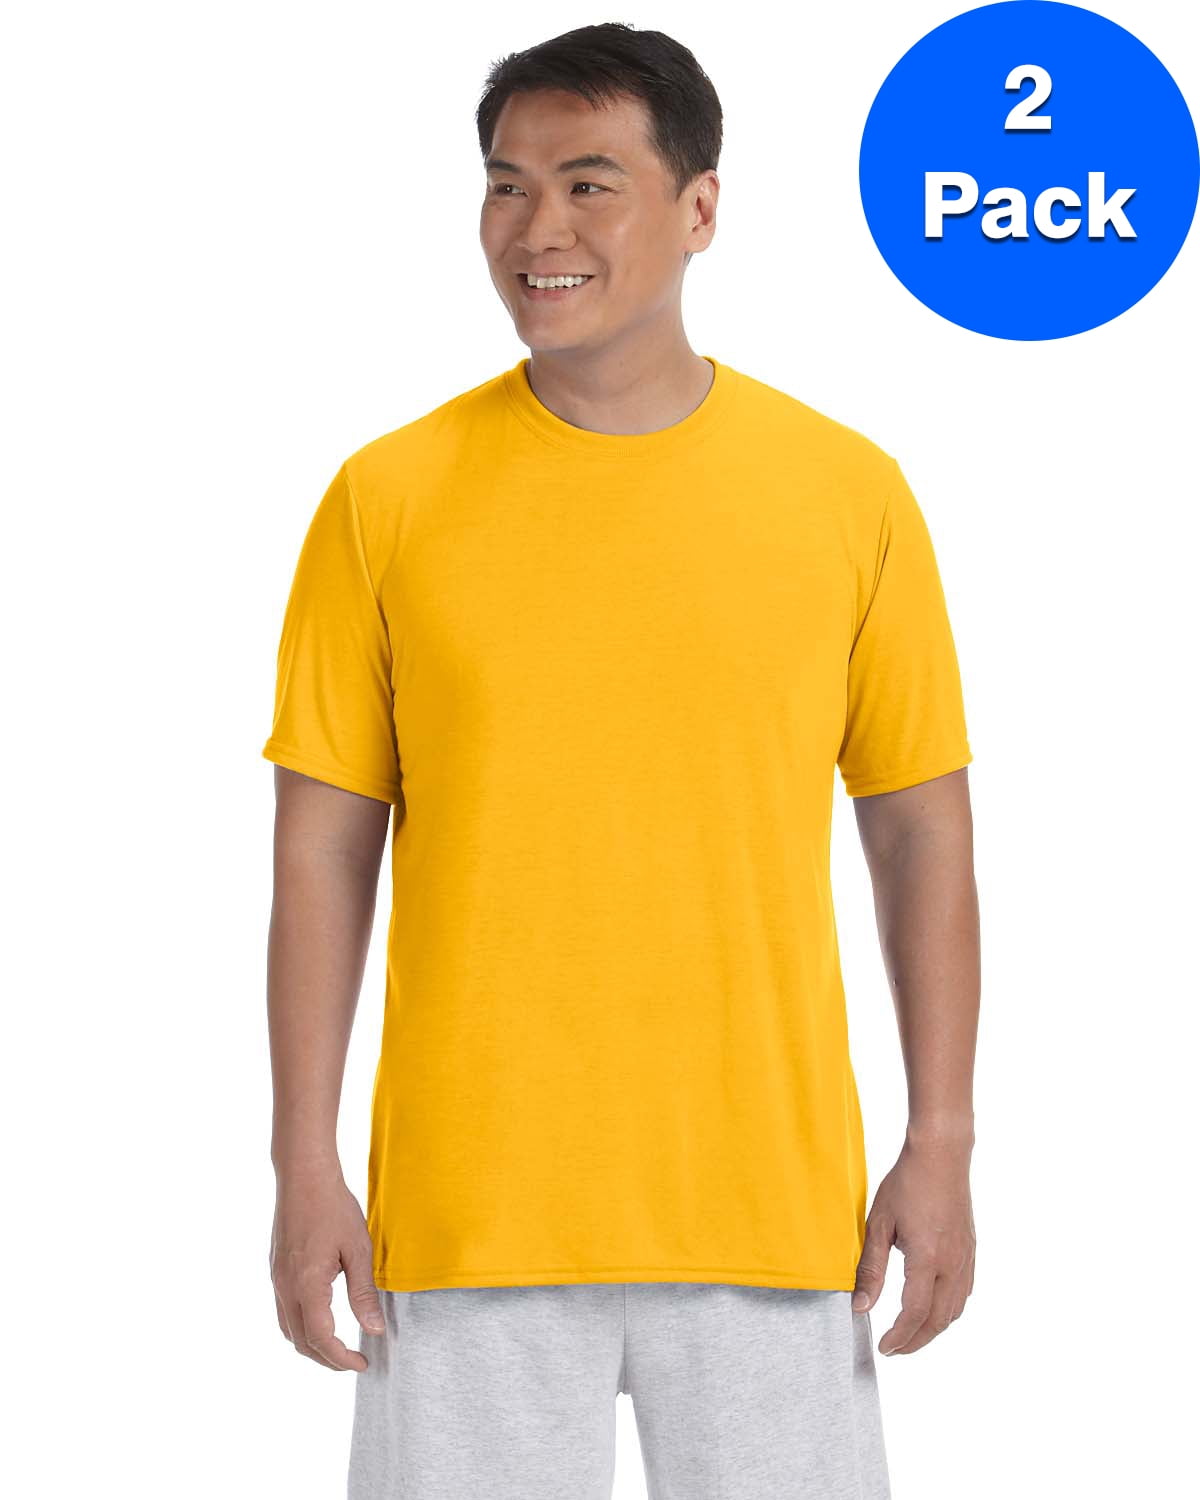 Mens Performance T-Shirt 2 Pack - Walmart.com